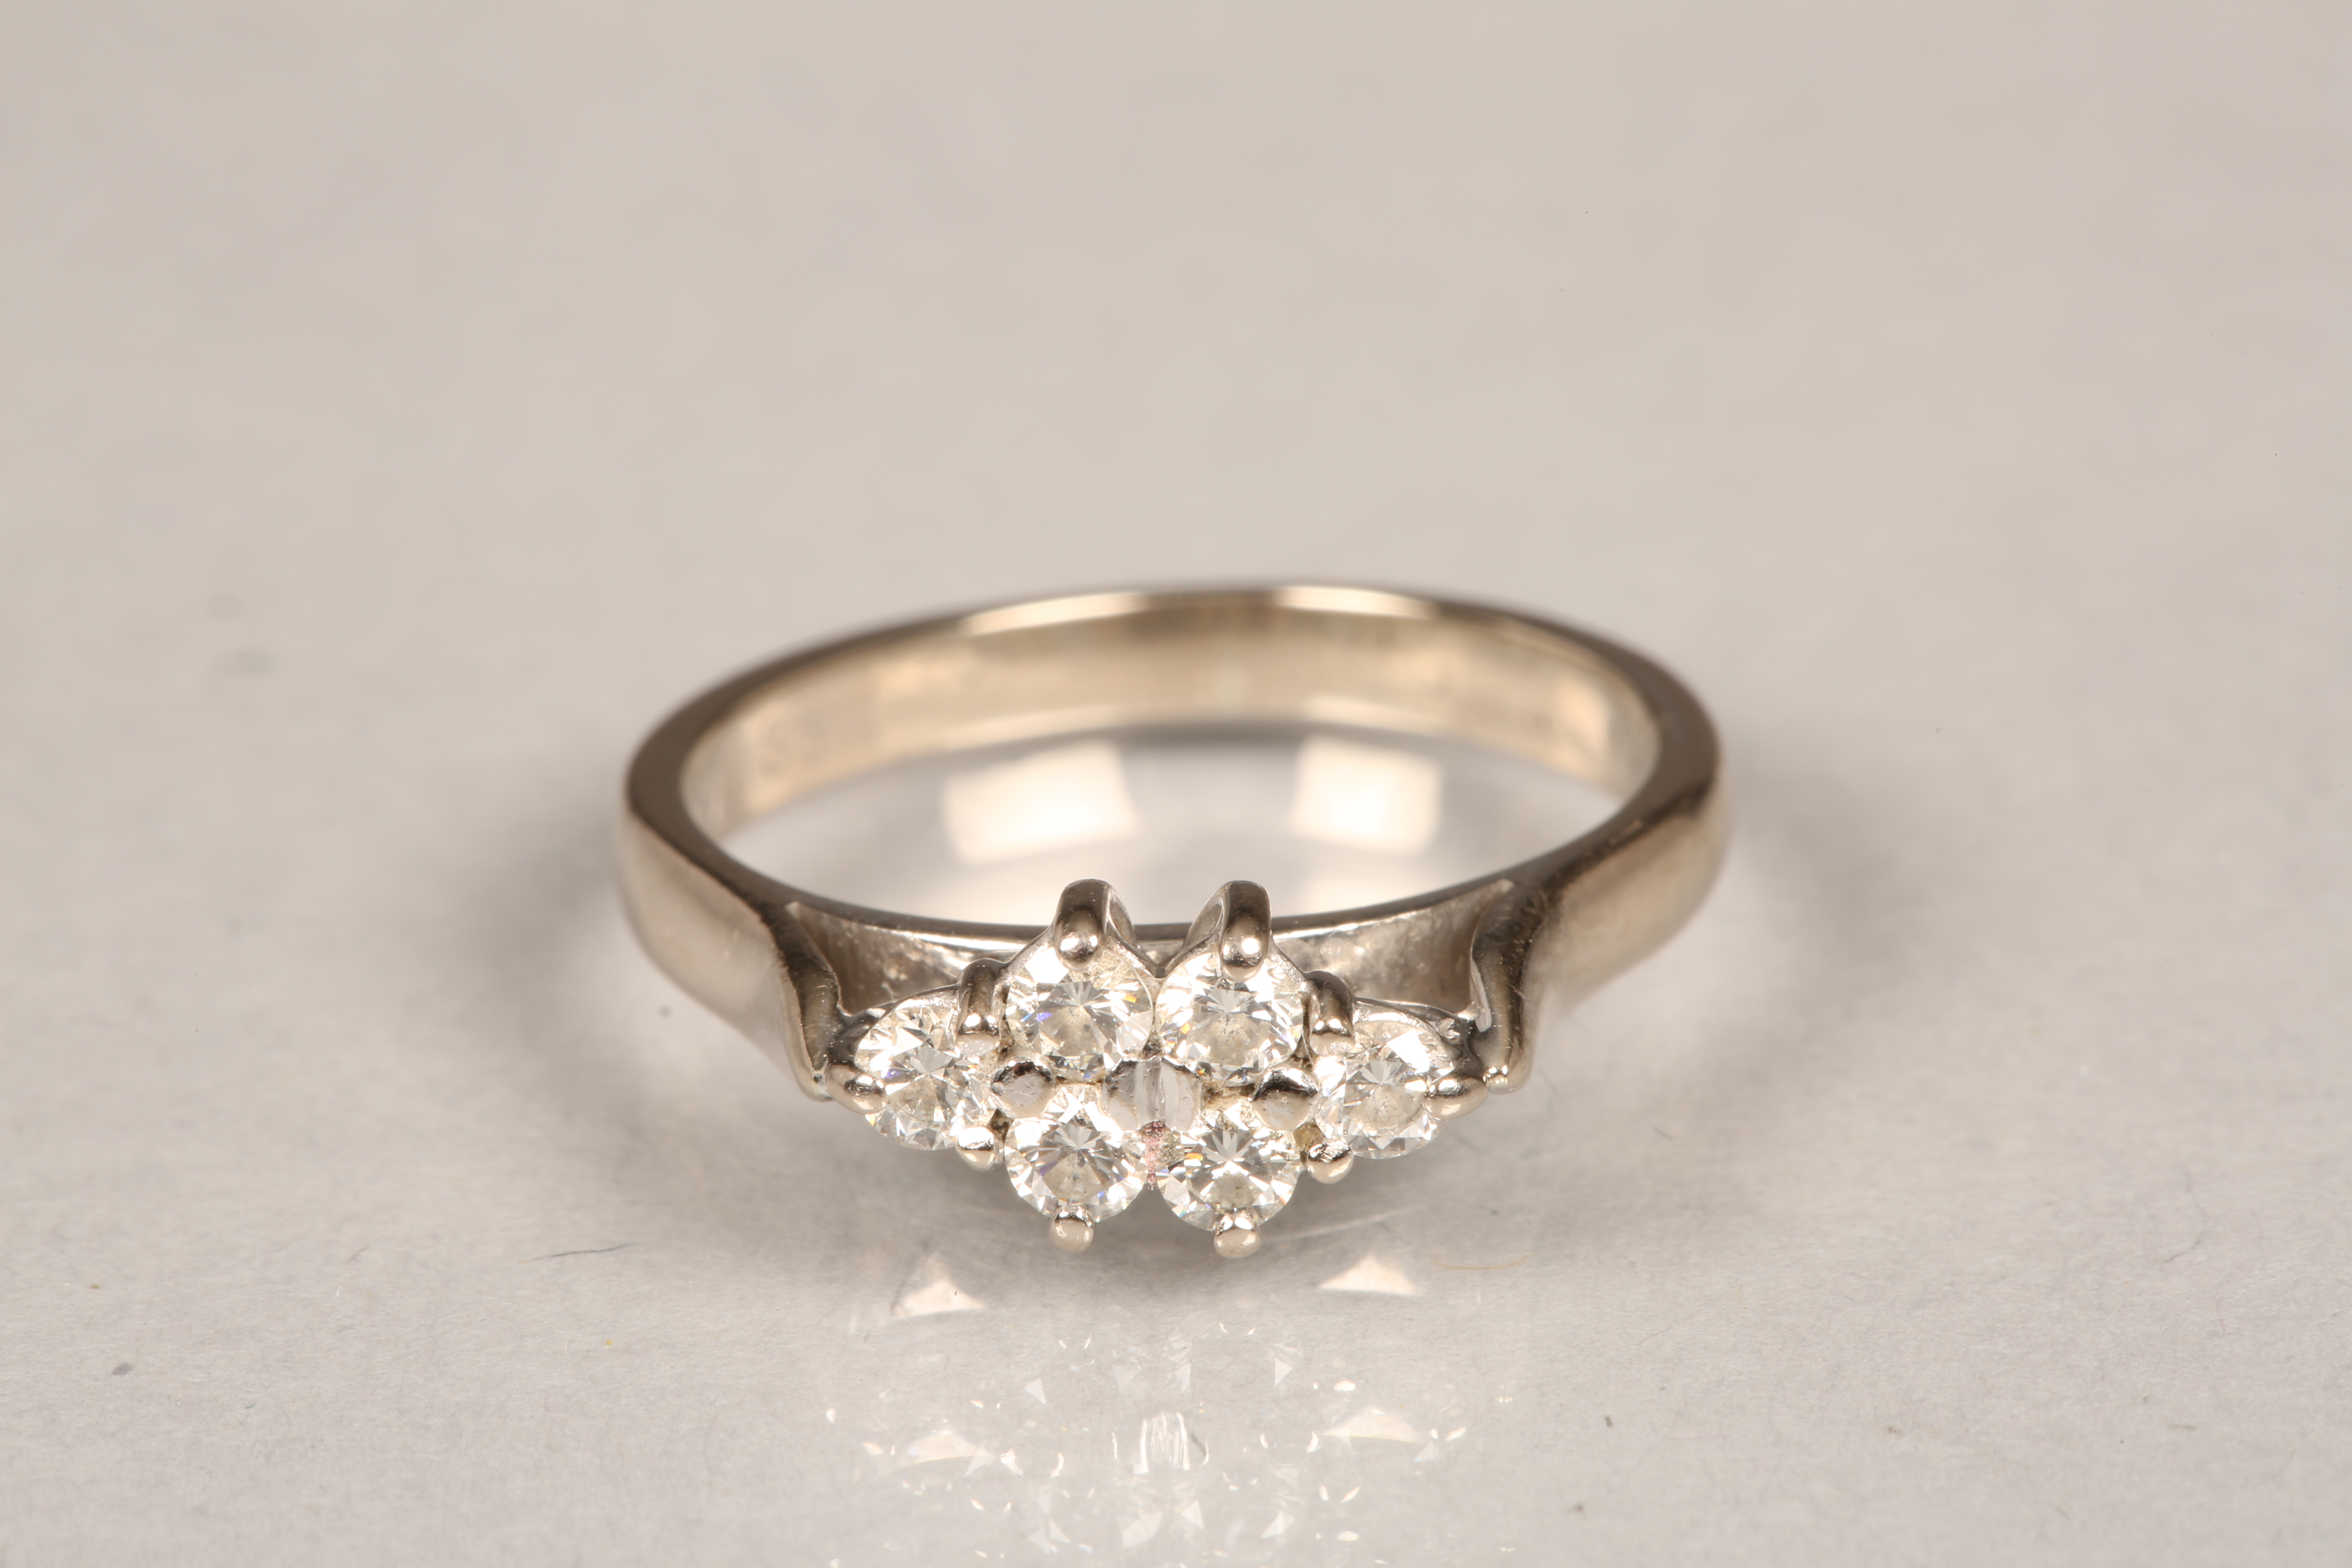 18 carat white gold diamond cluster ring. Six brilliant cut diamonds measuring 0.05carat each.